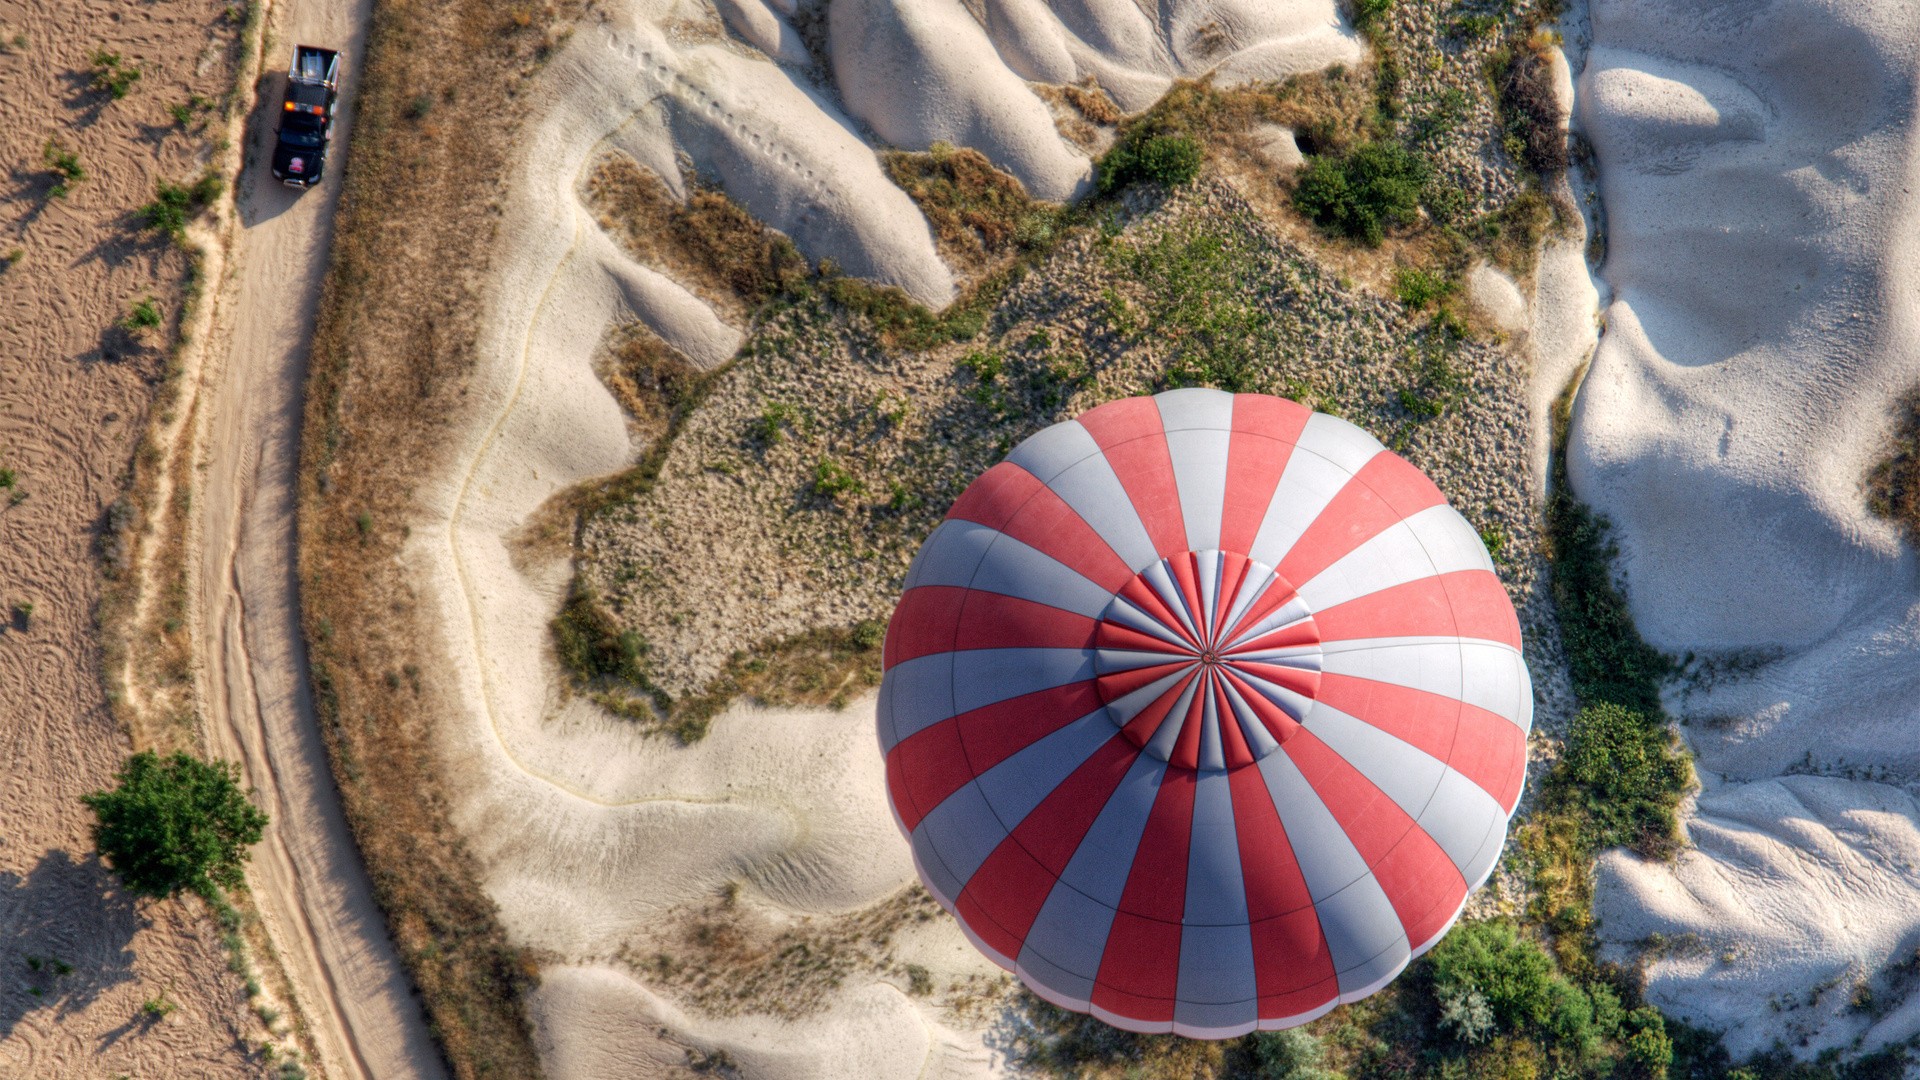 General 1920x1080 hot air balloons landscape aerial view desert dirt road vehicle car digital art